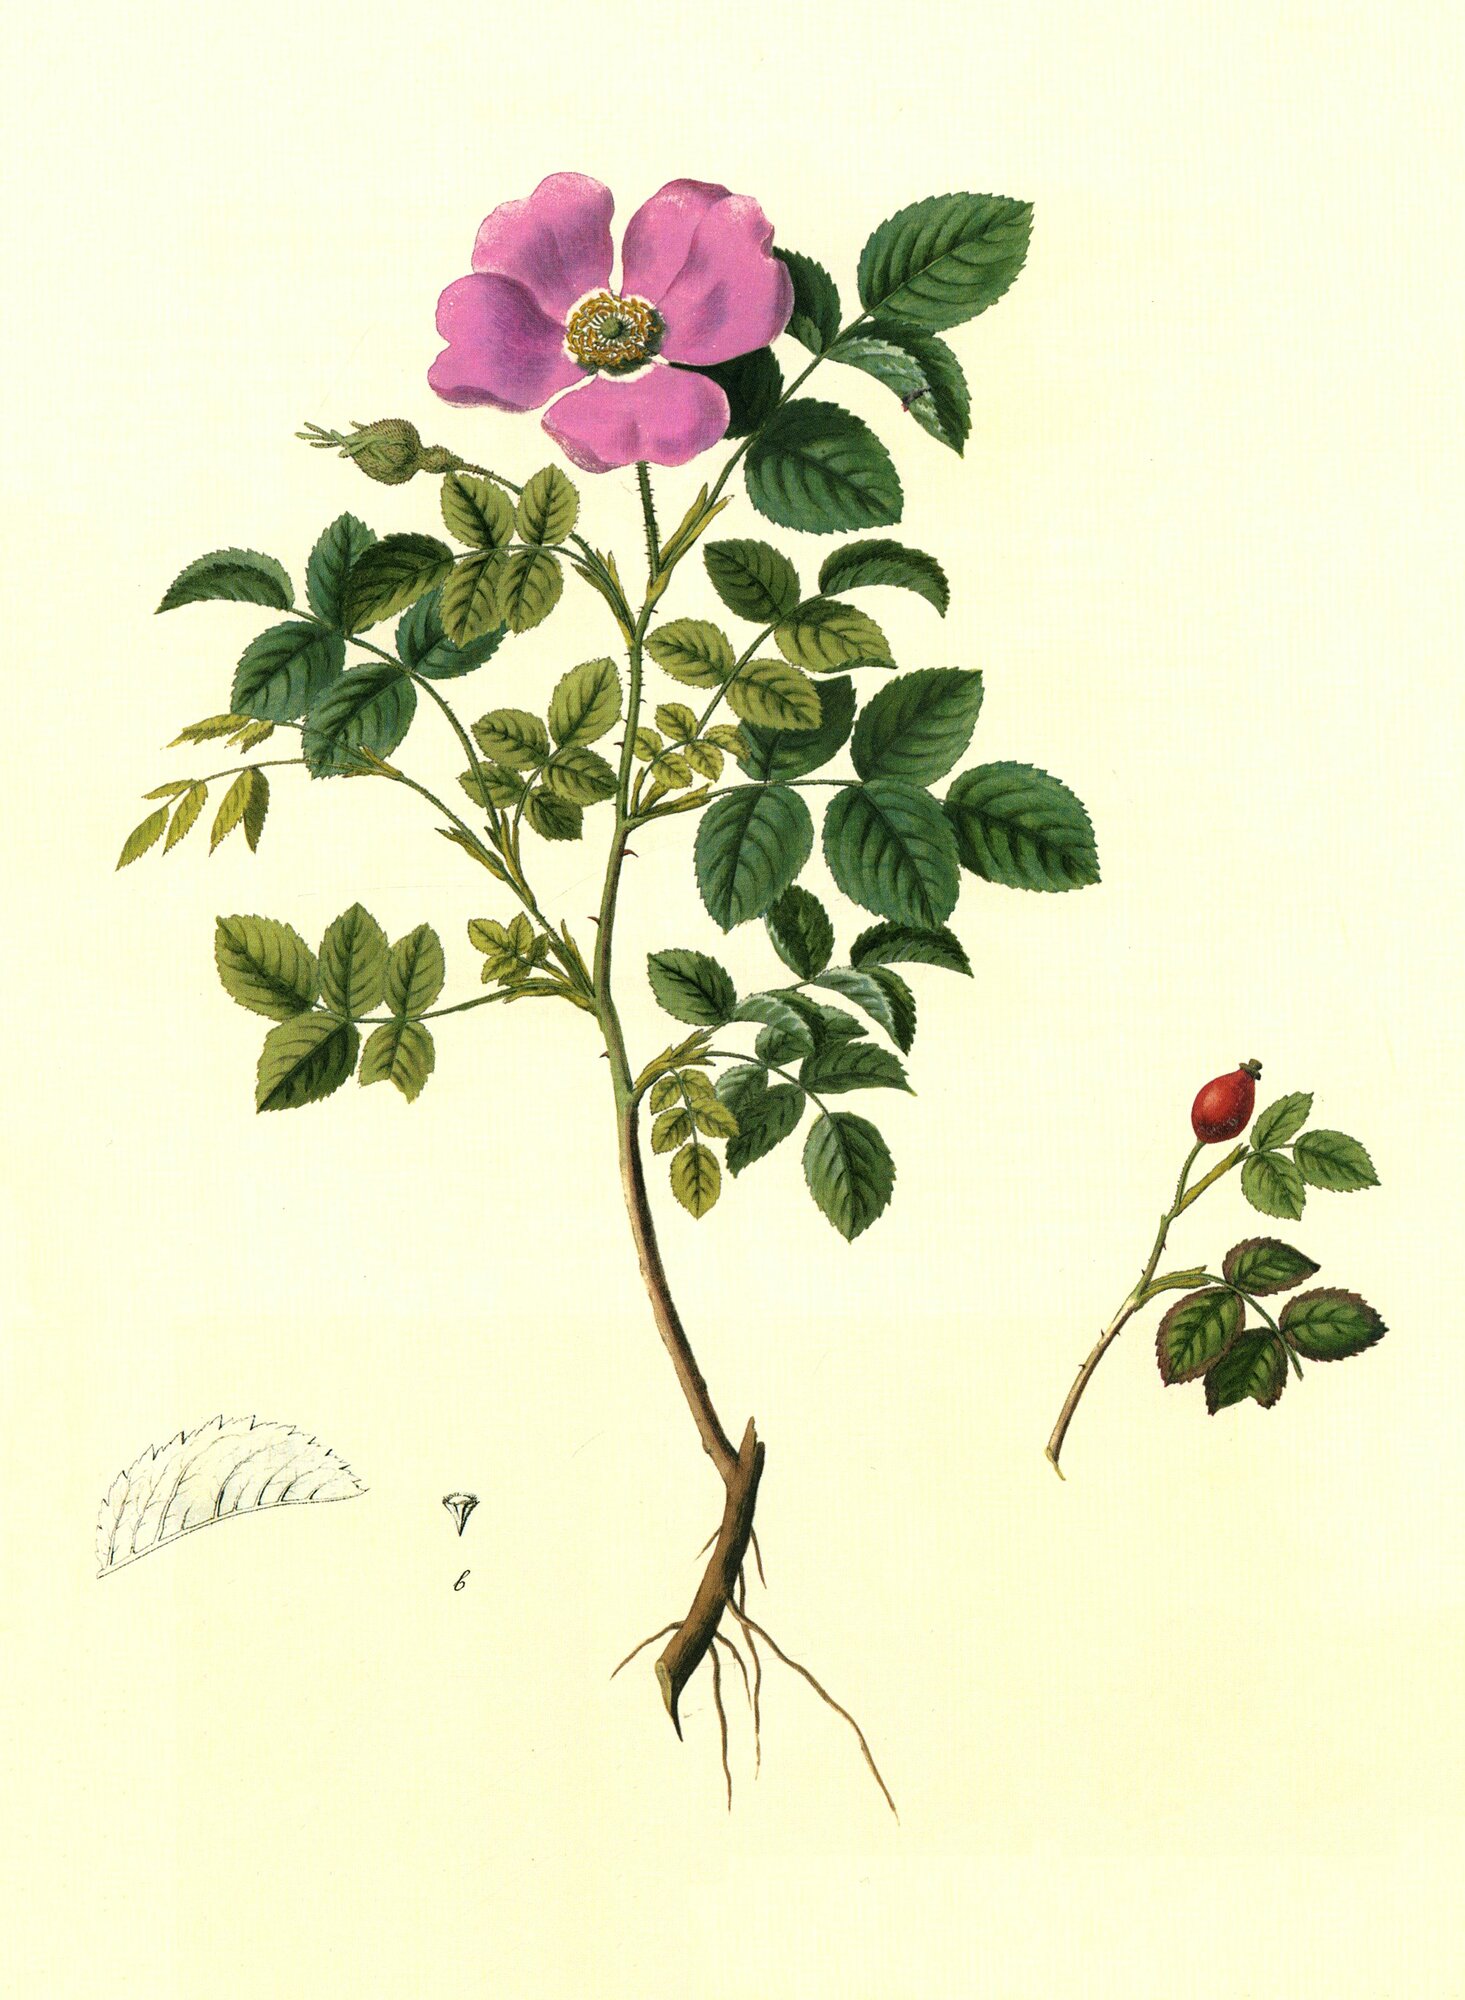 Gennuria plantarum rariorum russiae meridoinalis Ф. К. Биберштейна глазами молодых исследователей - фото №2